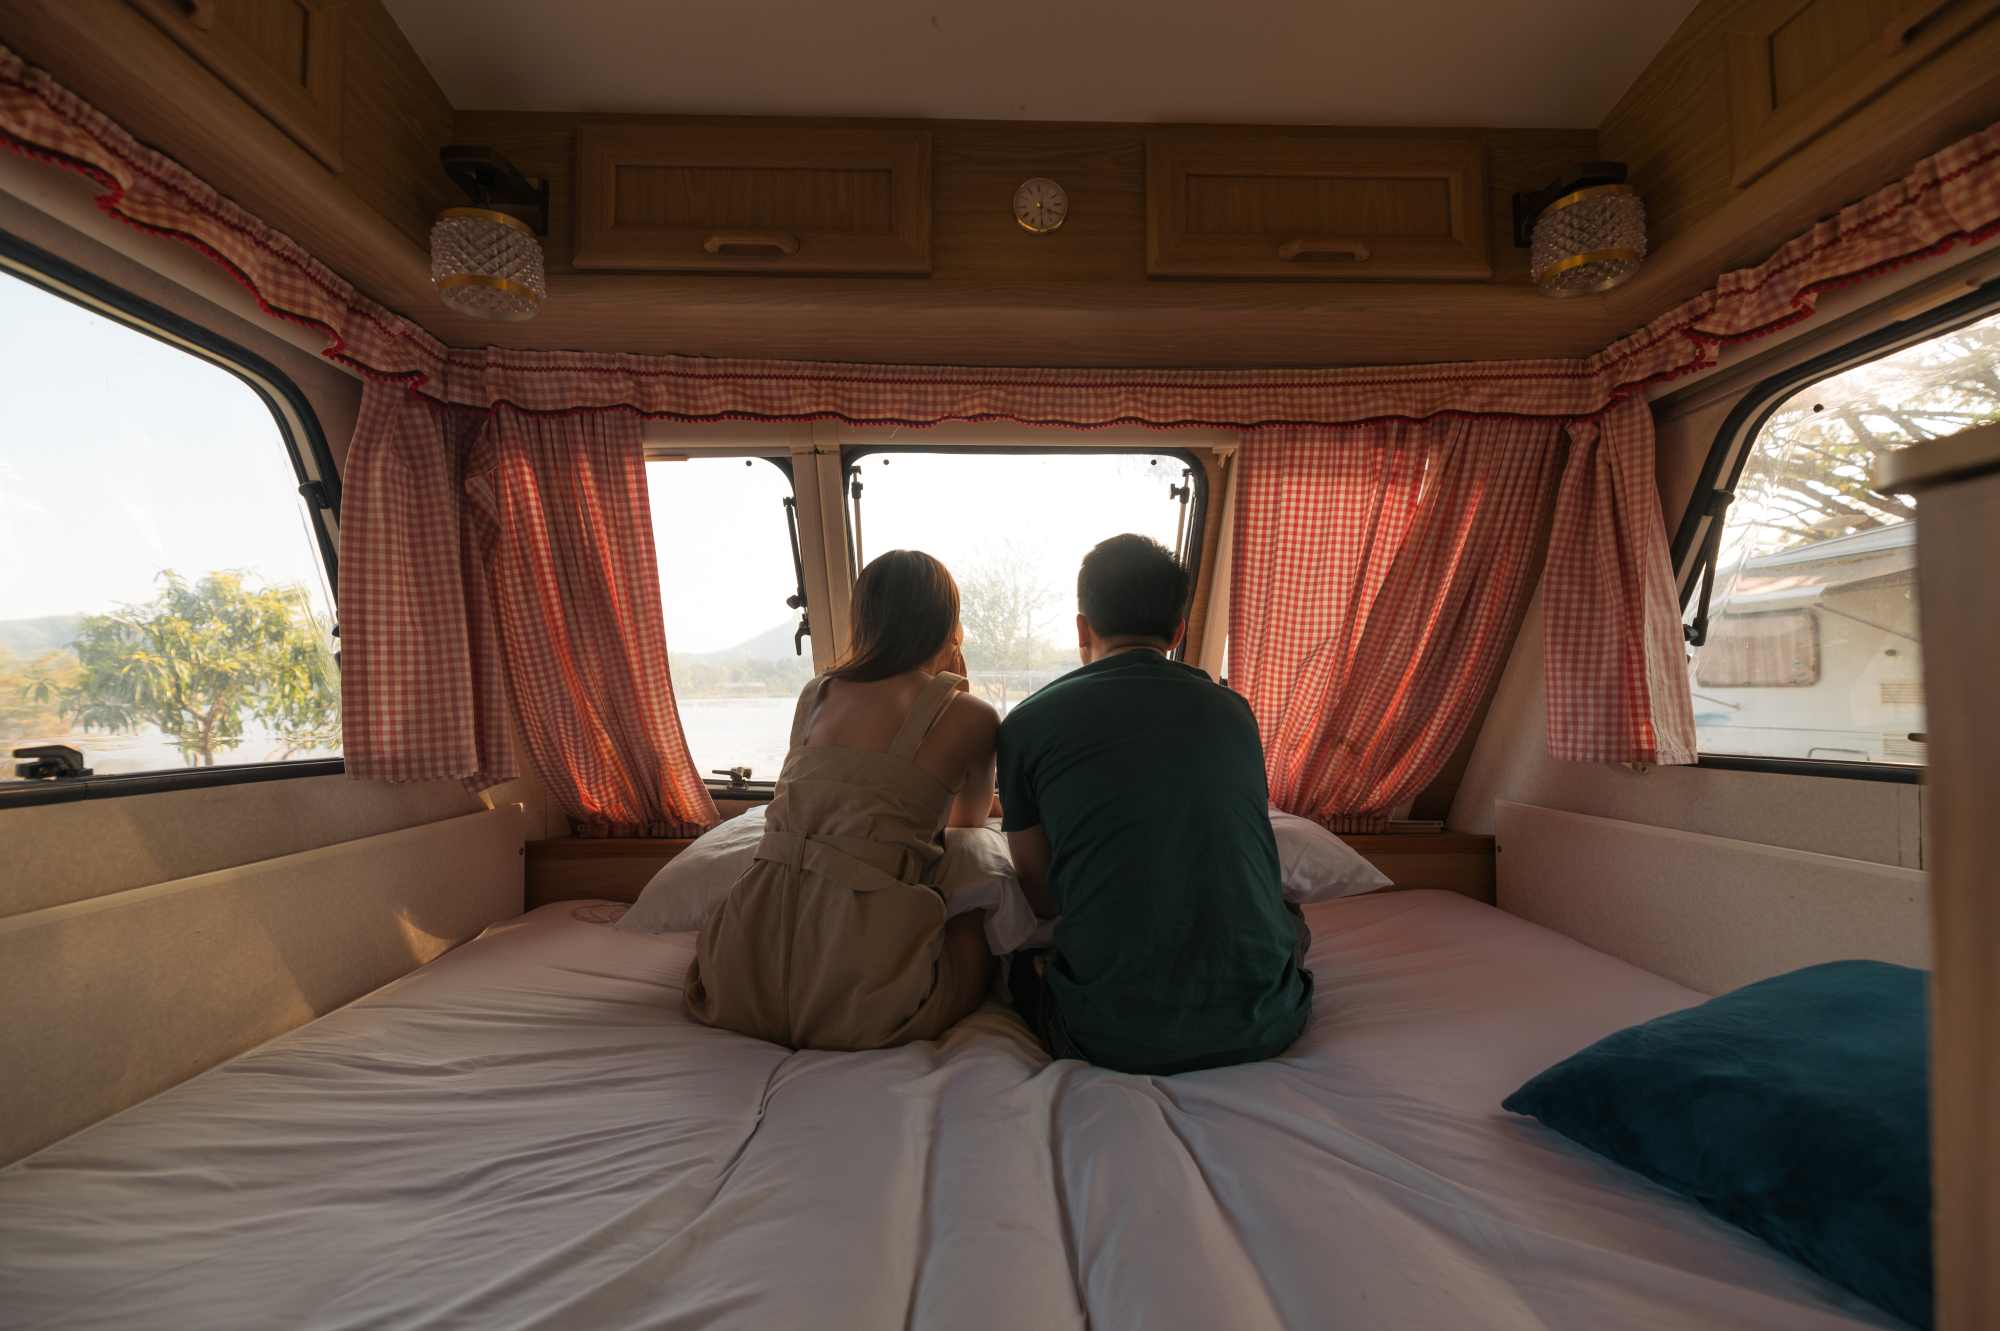 Couple sitting on mattress inside an RV